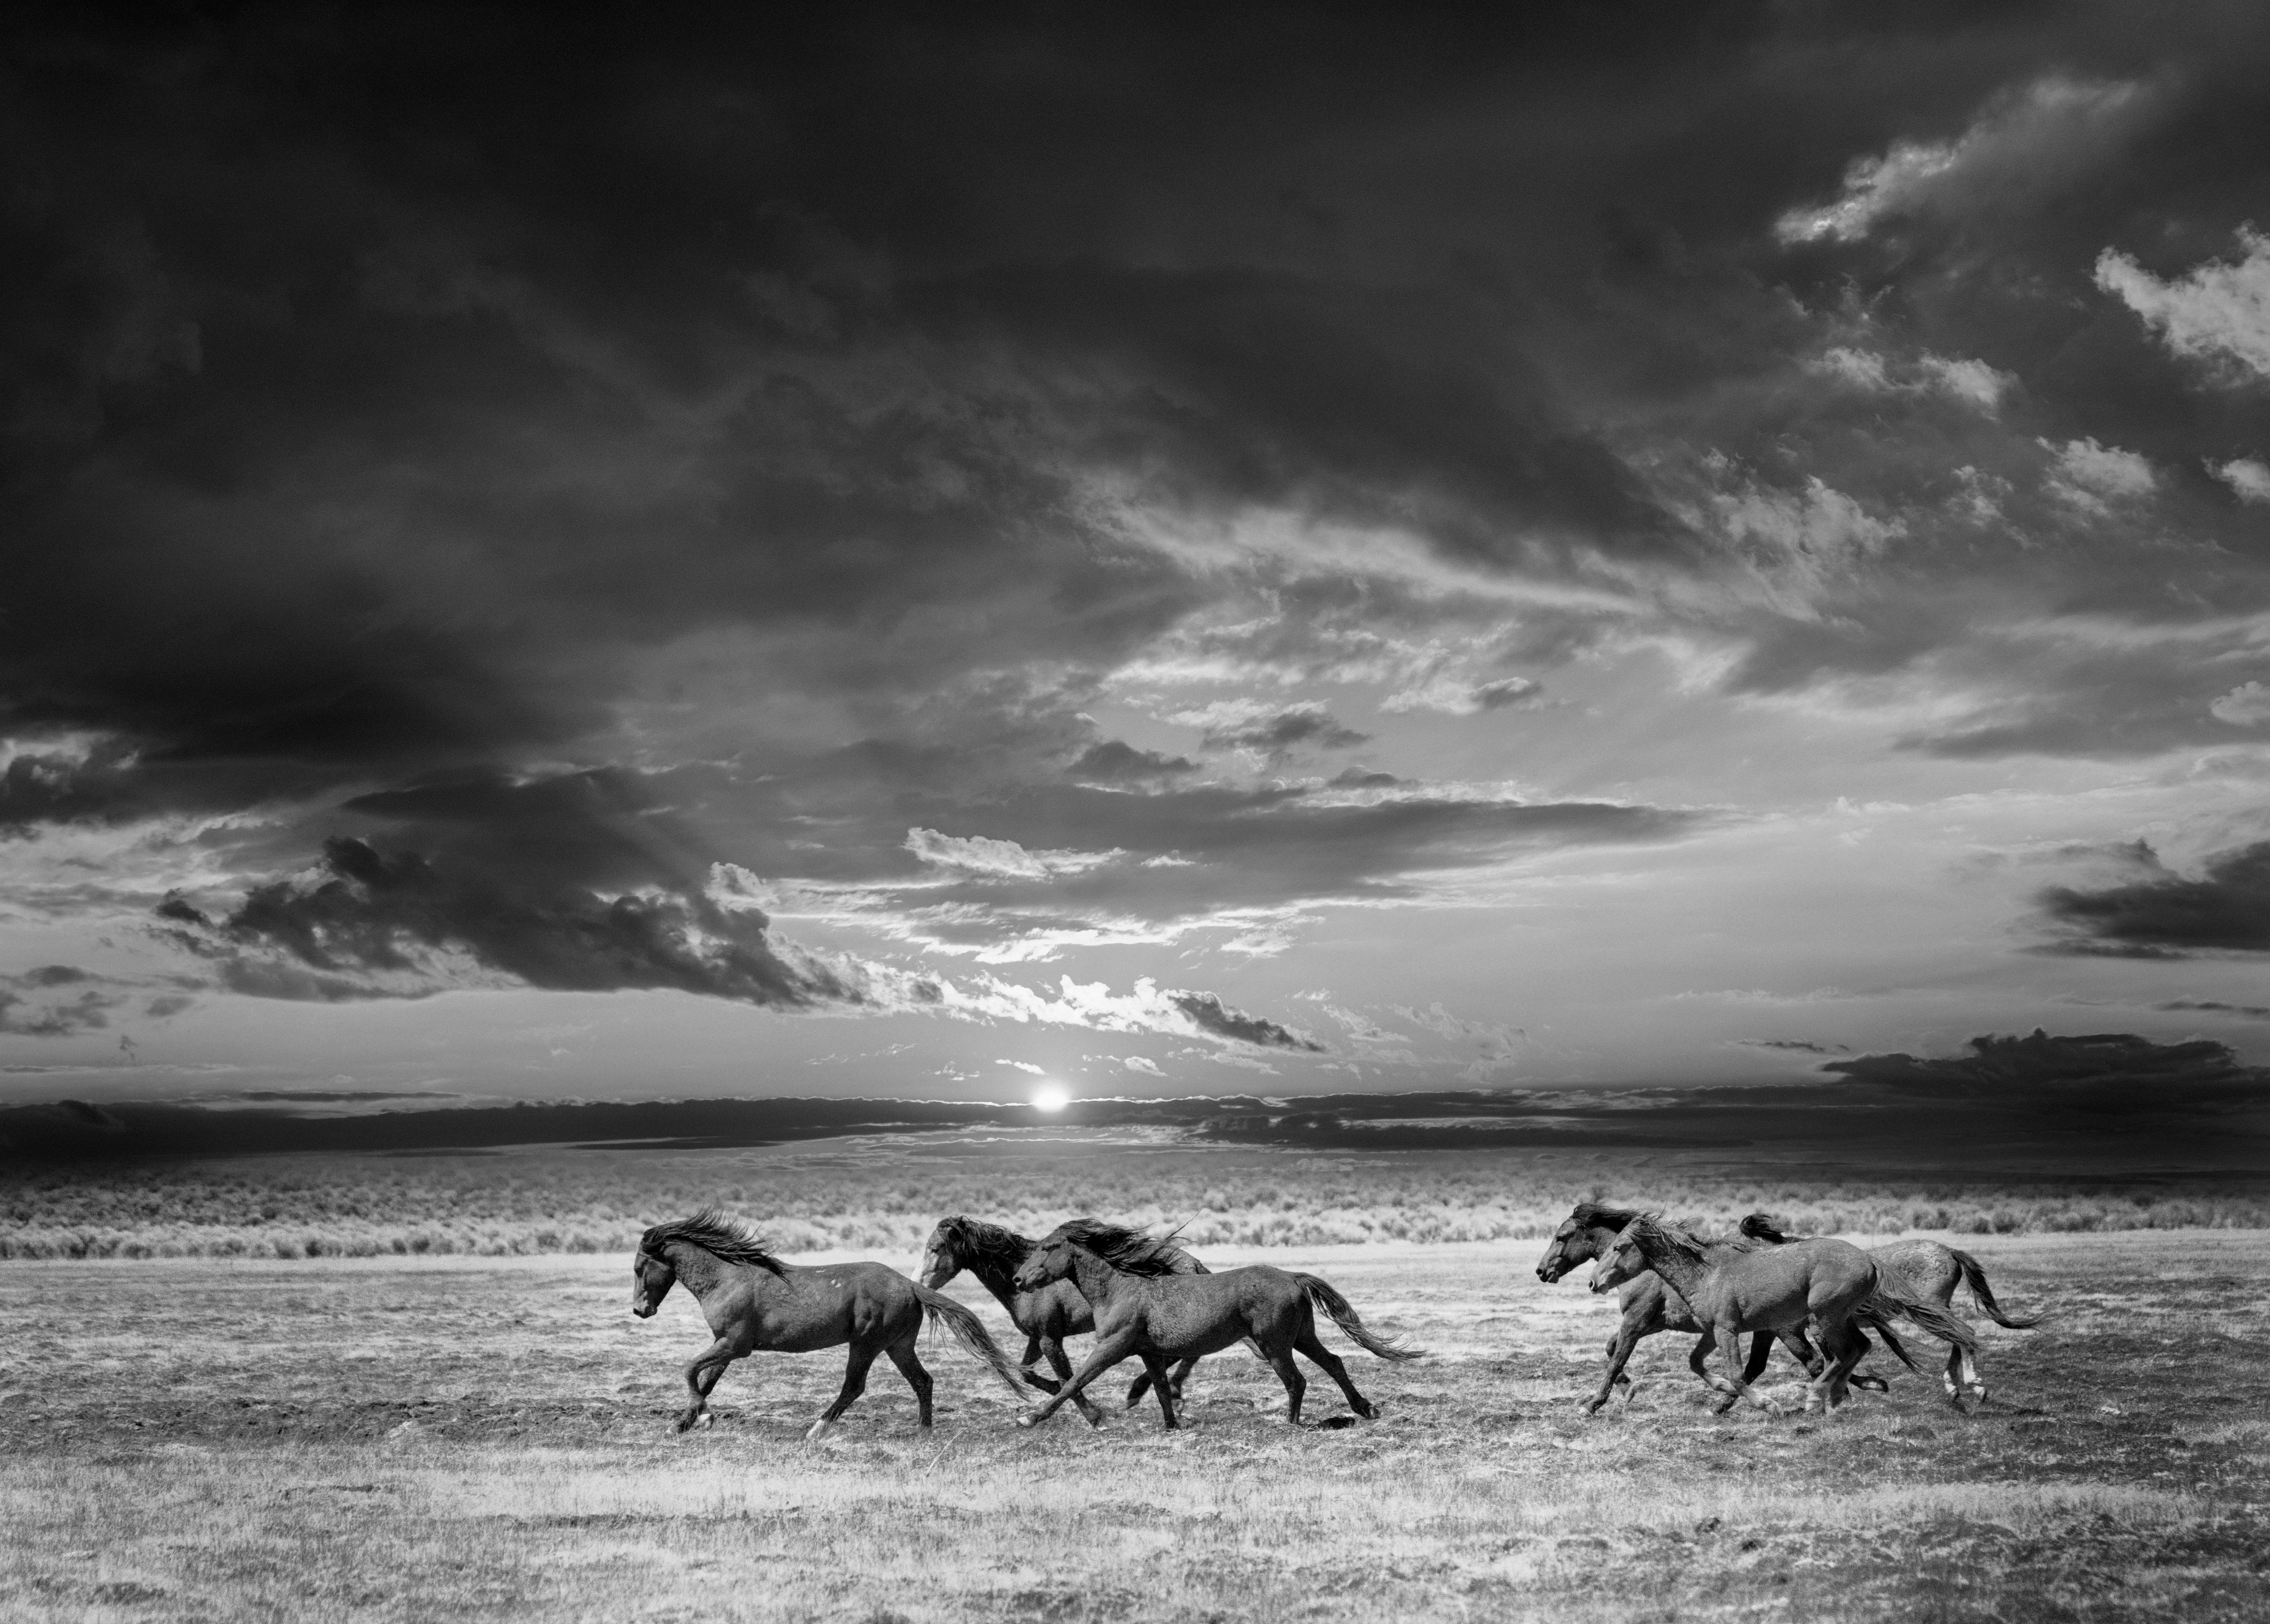 Shane Russeck Animal Print - "Chasing the Light" 60x40- Black & White Photography of Wild Horses Mustangs Art